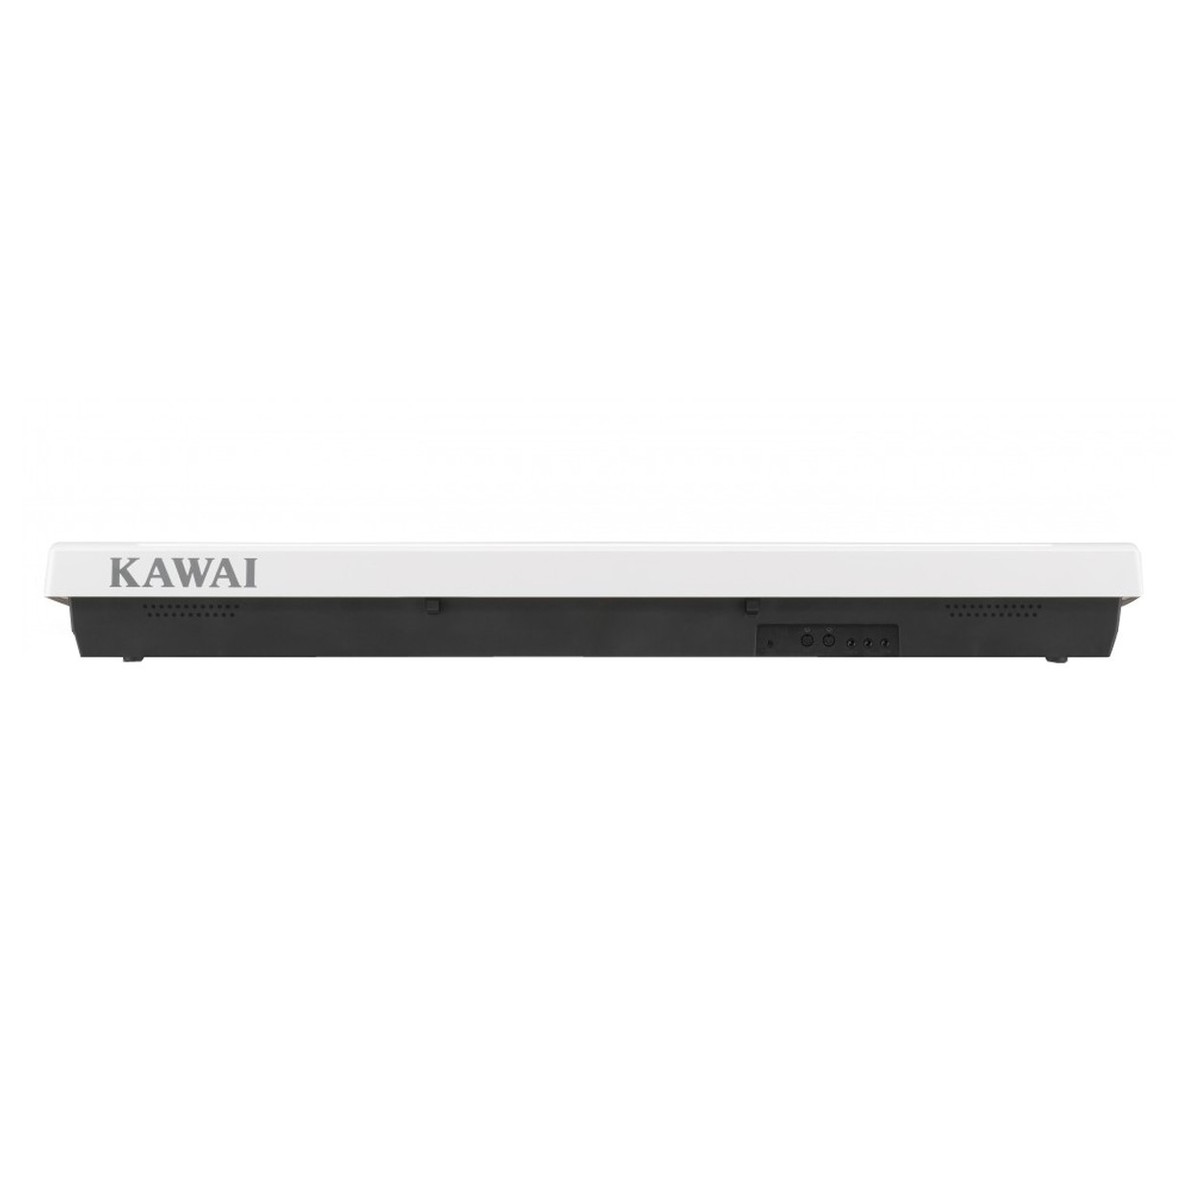 Kawai Es110 - Blanc - Digital Klavier - Variation 2